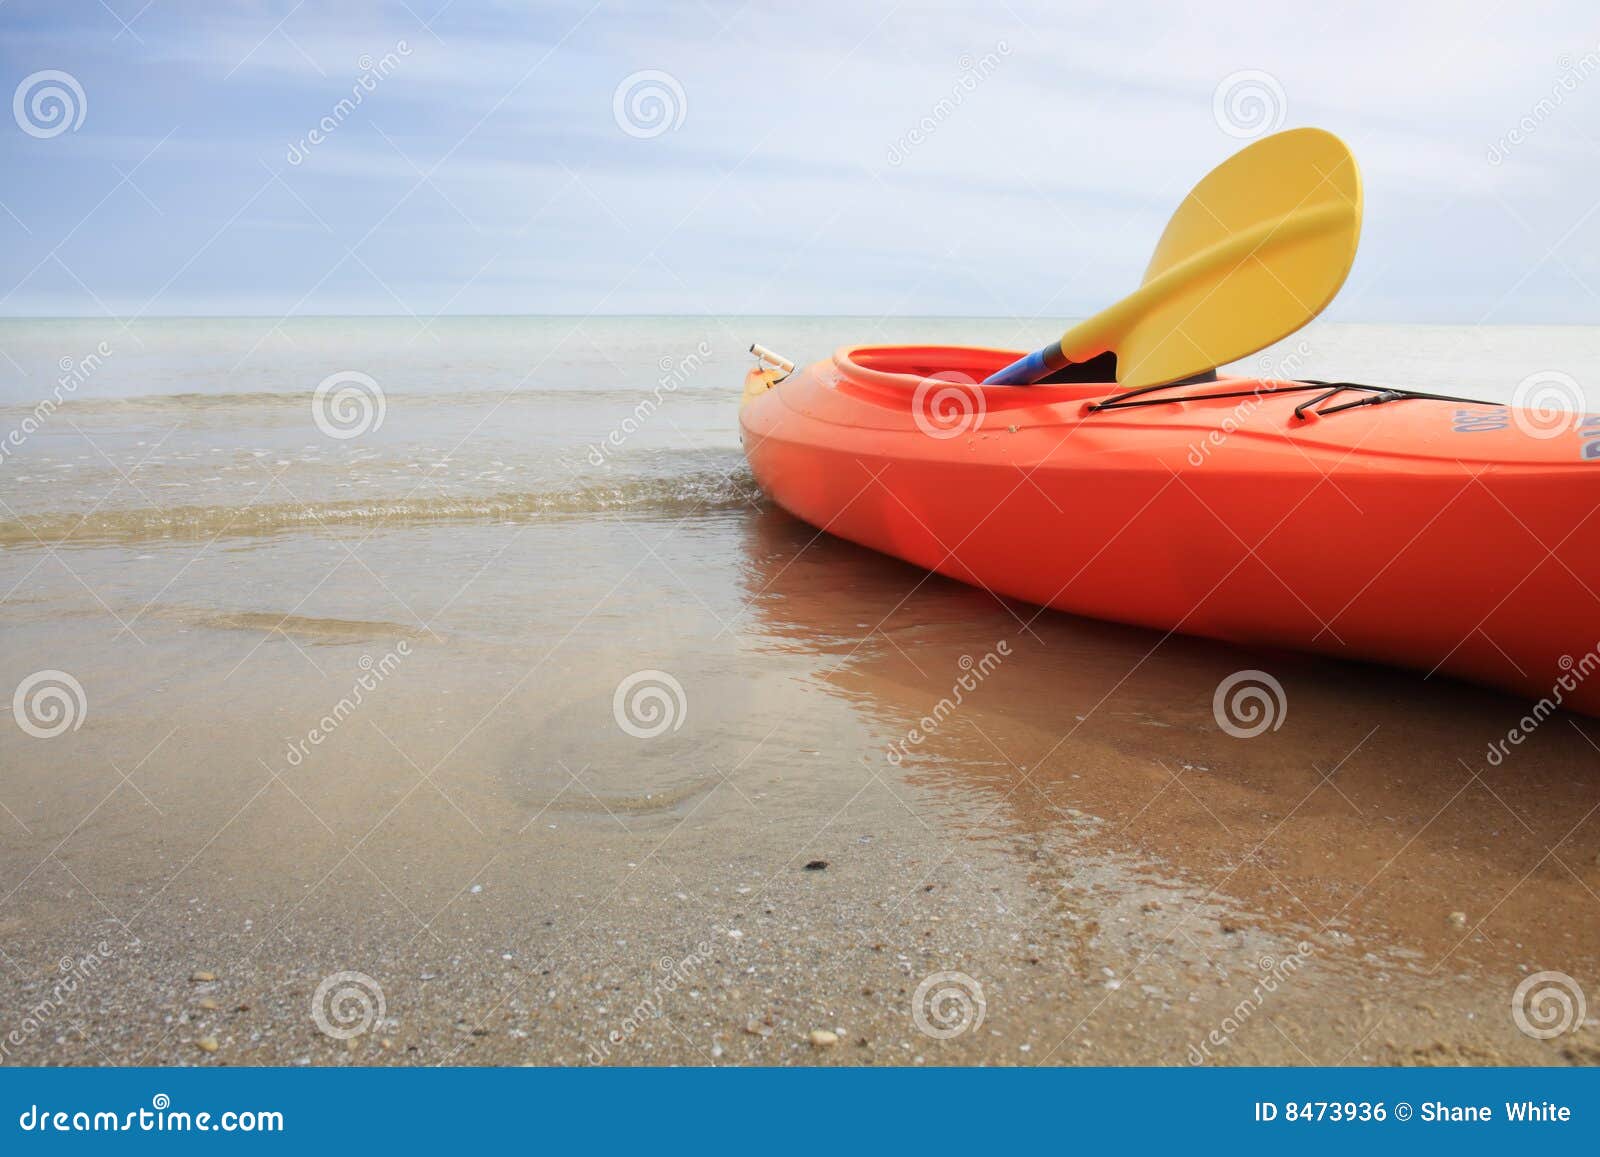 Kayak stock photo. Image of colorful, copyspace, sand - 8473936